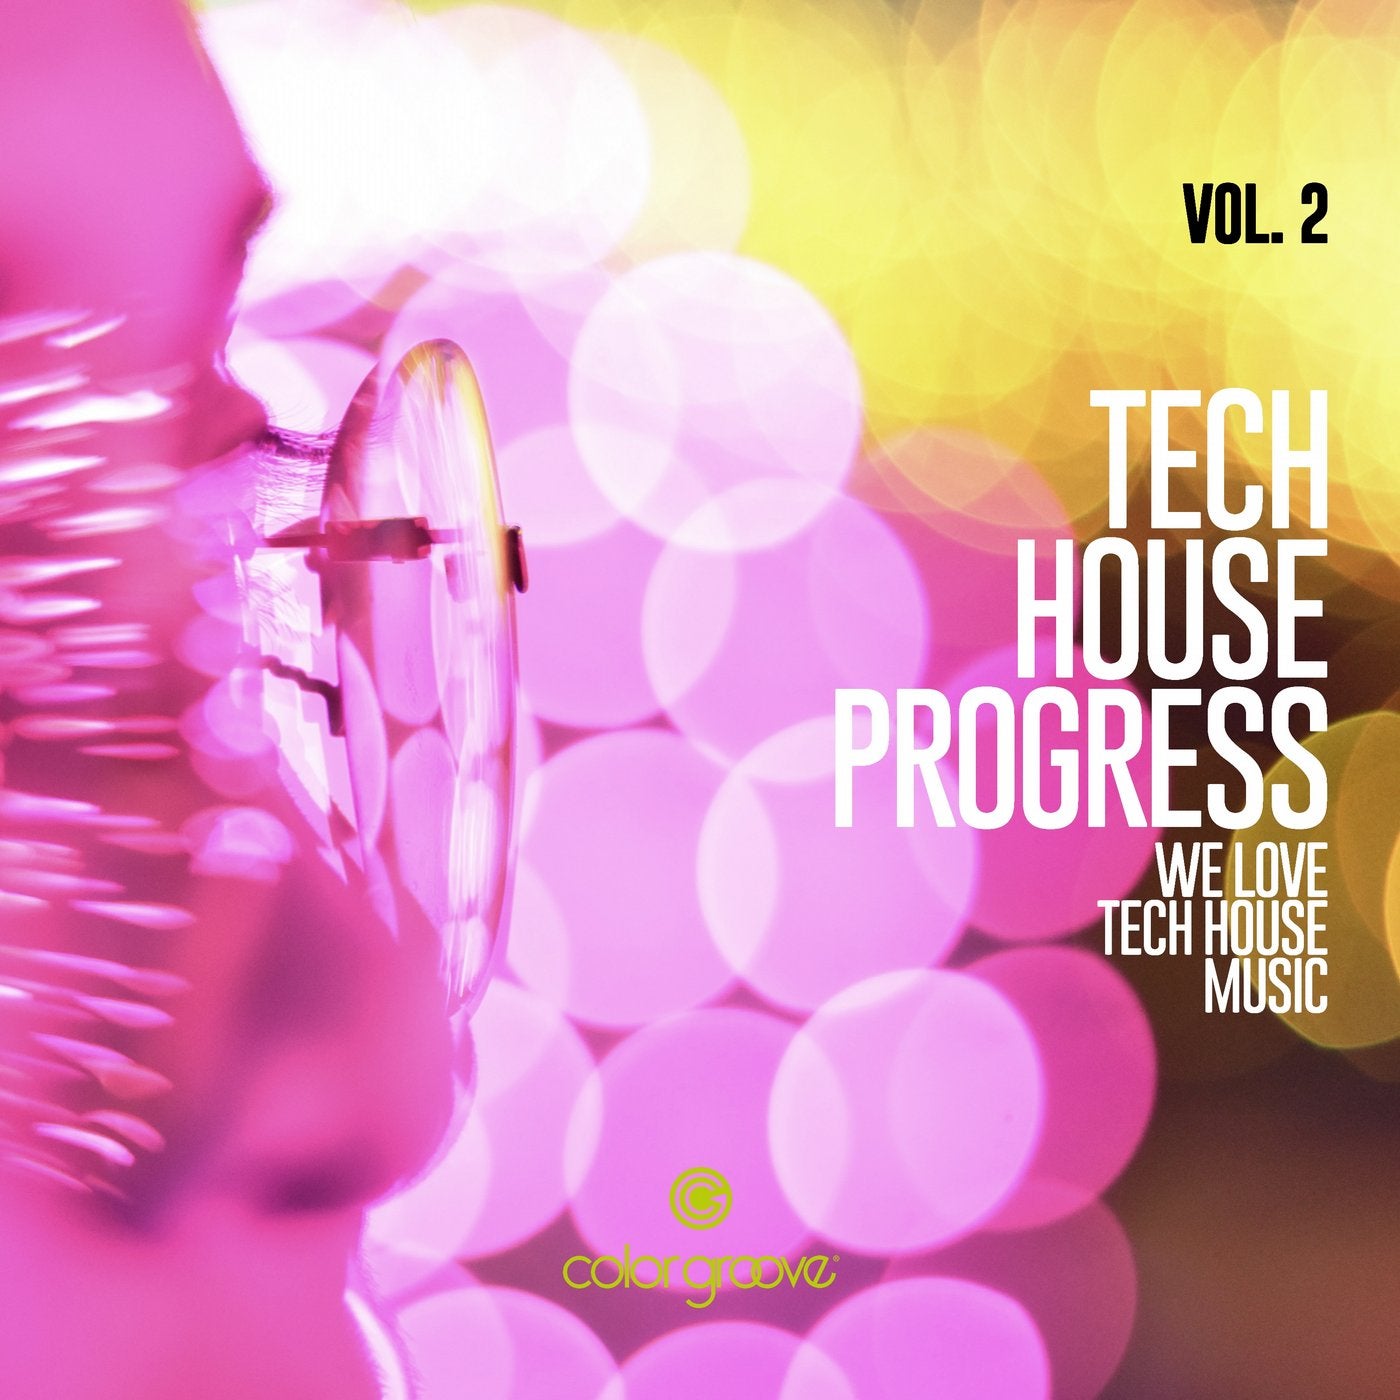 Tech House Progress, Vol. 2 (We Love Tech House Music)